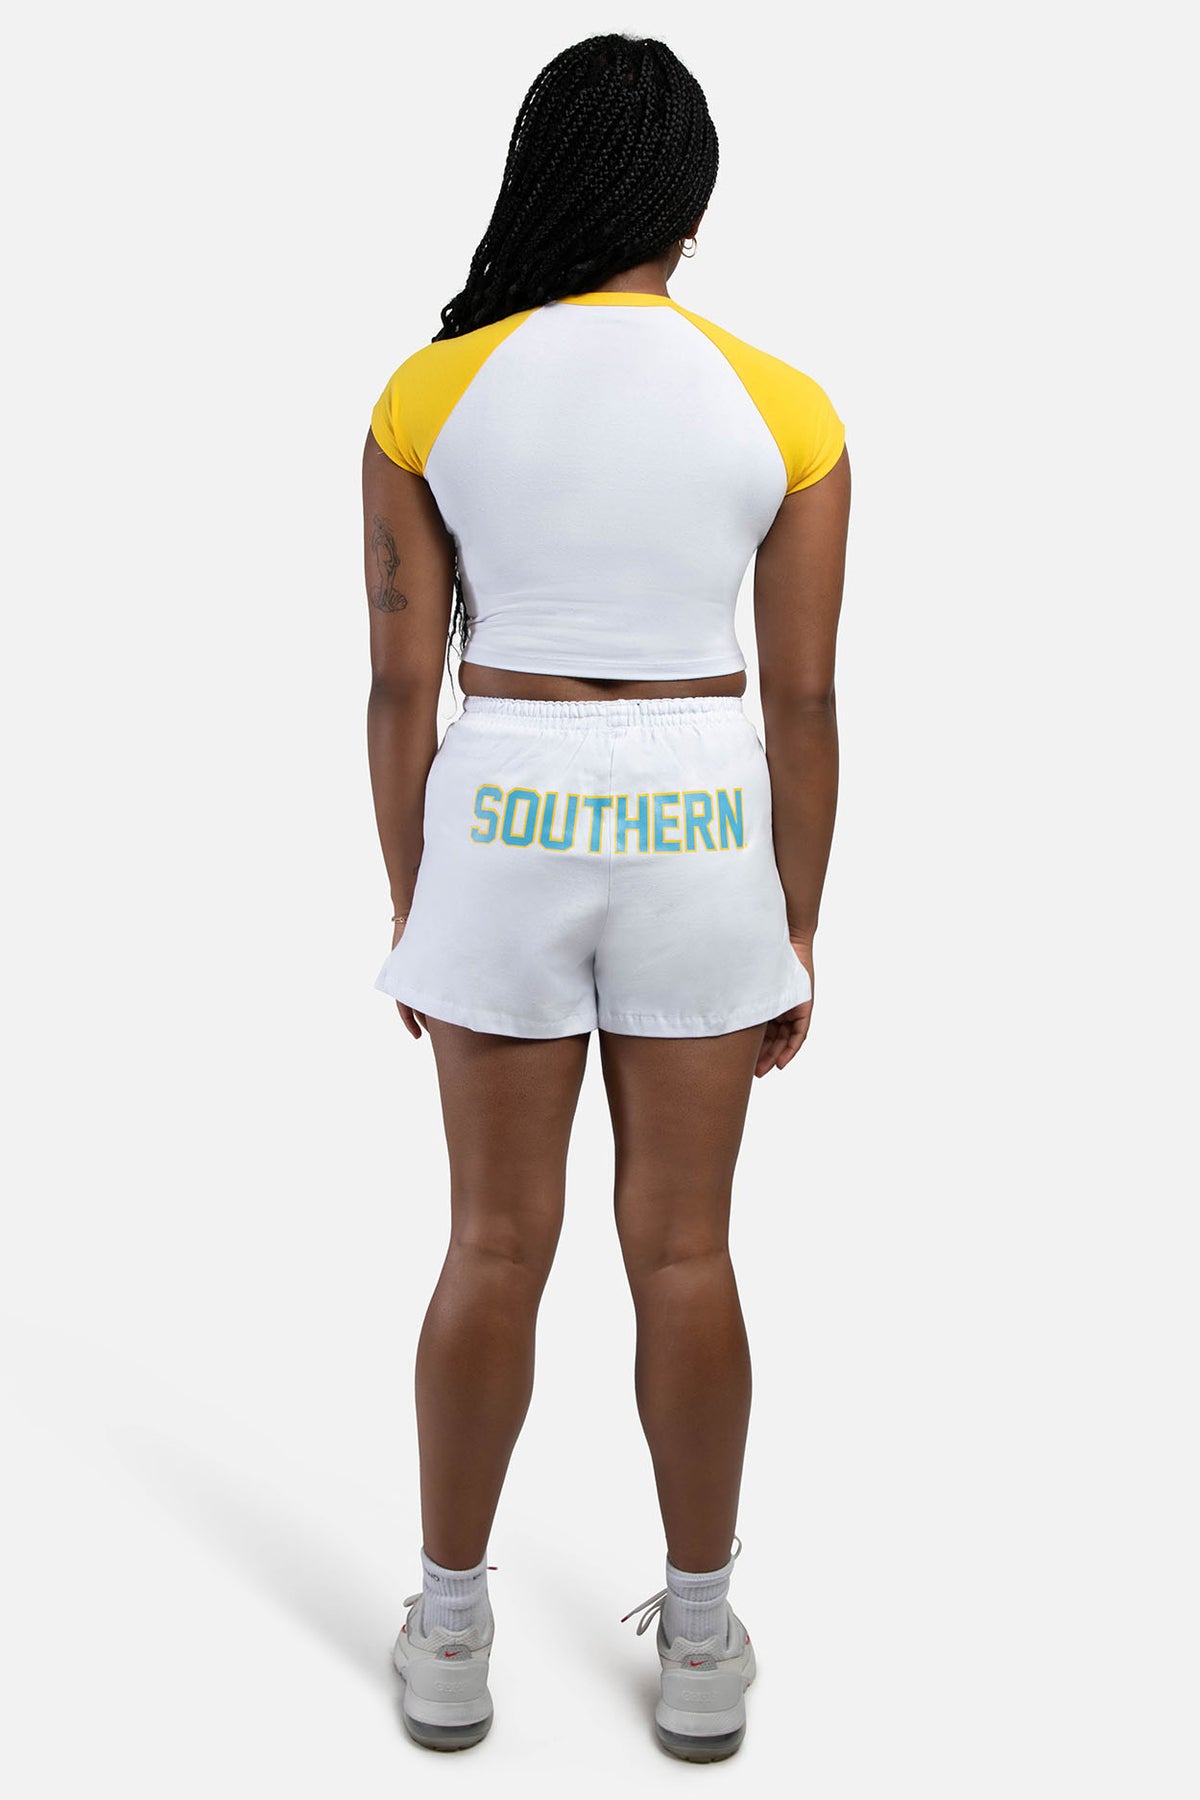 Southern University P.E. Shorts